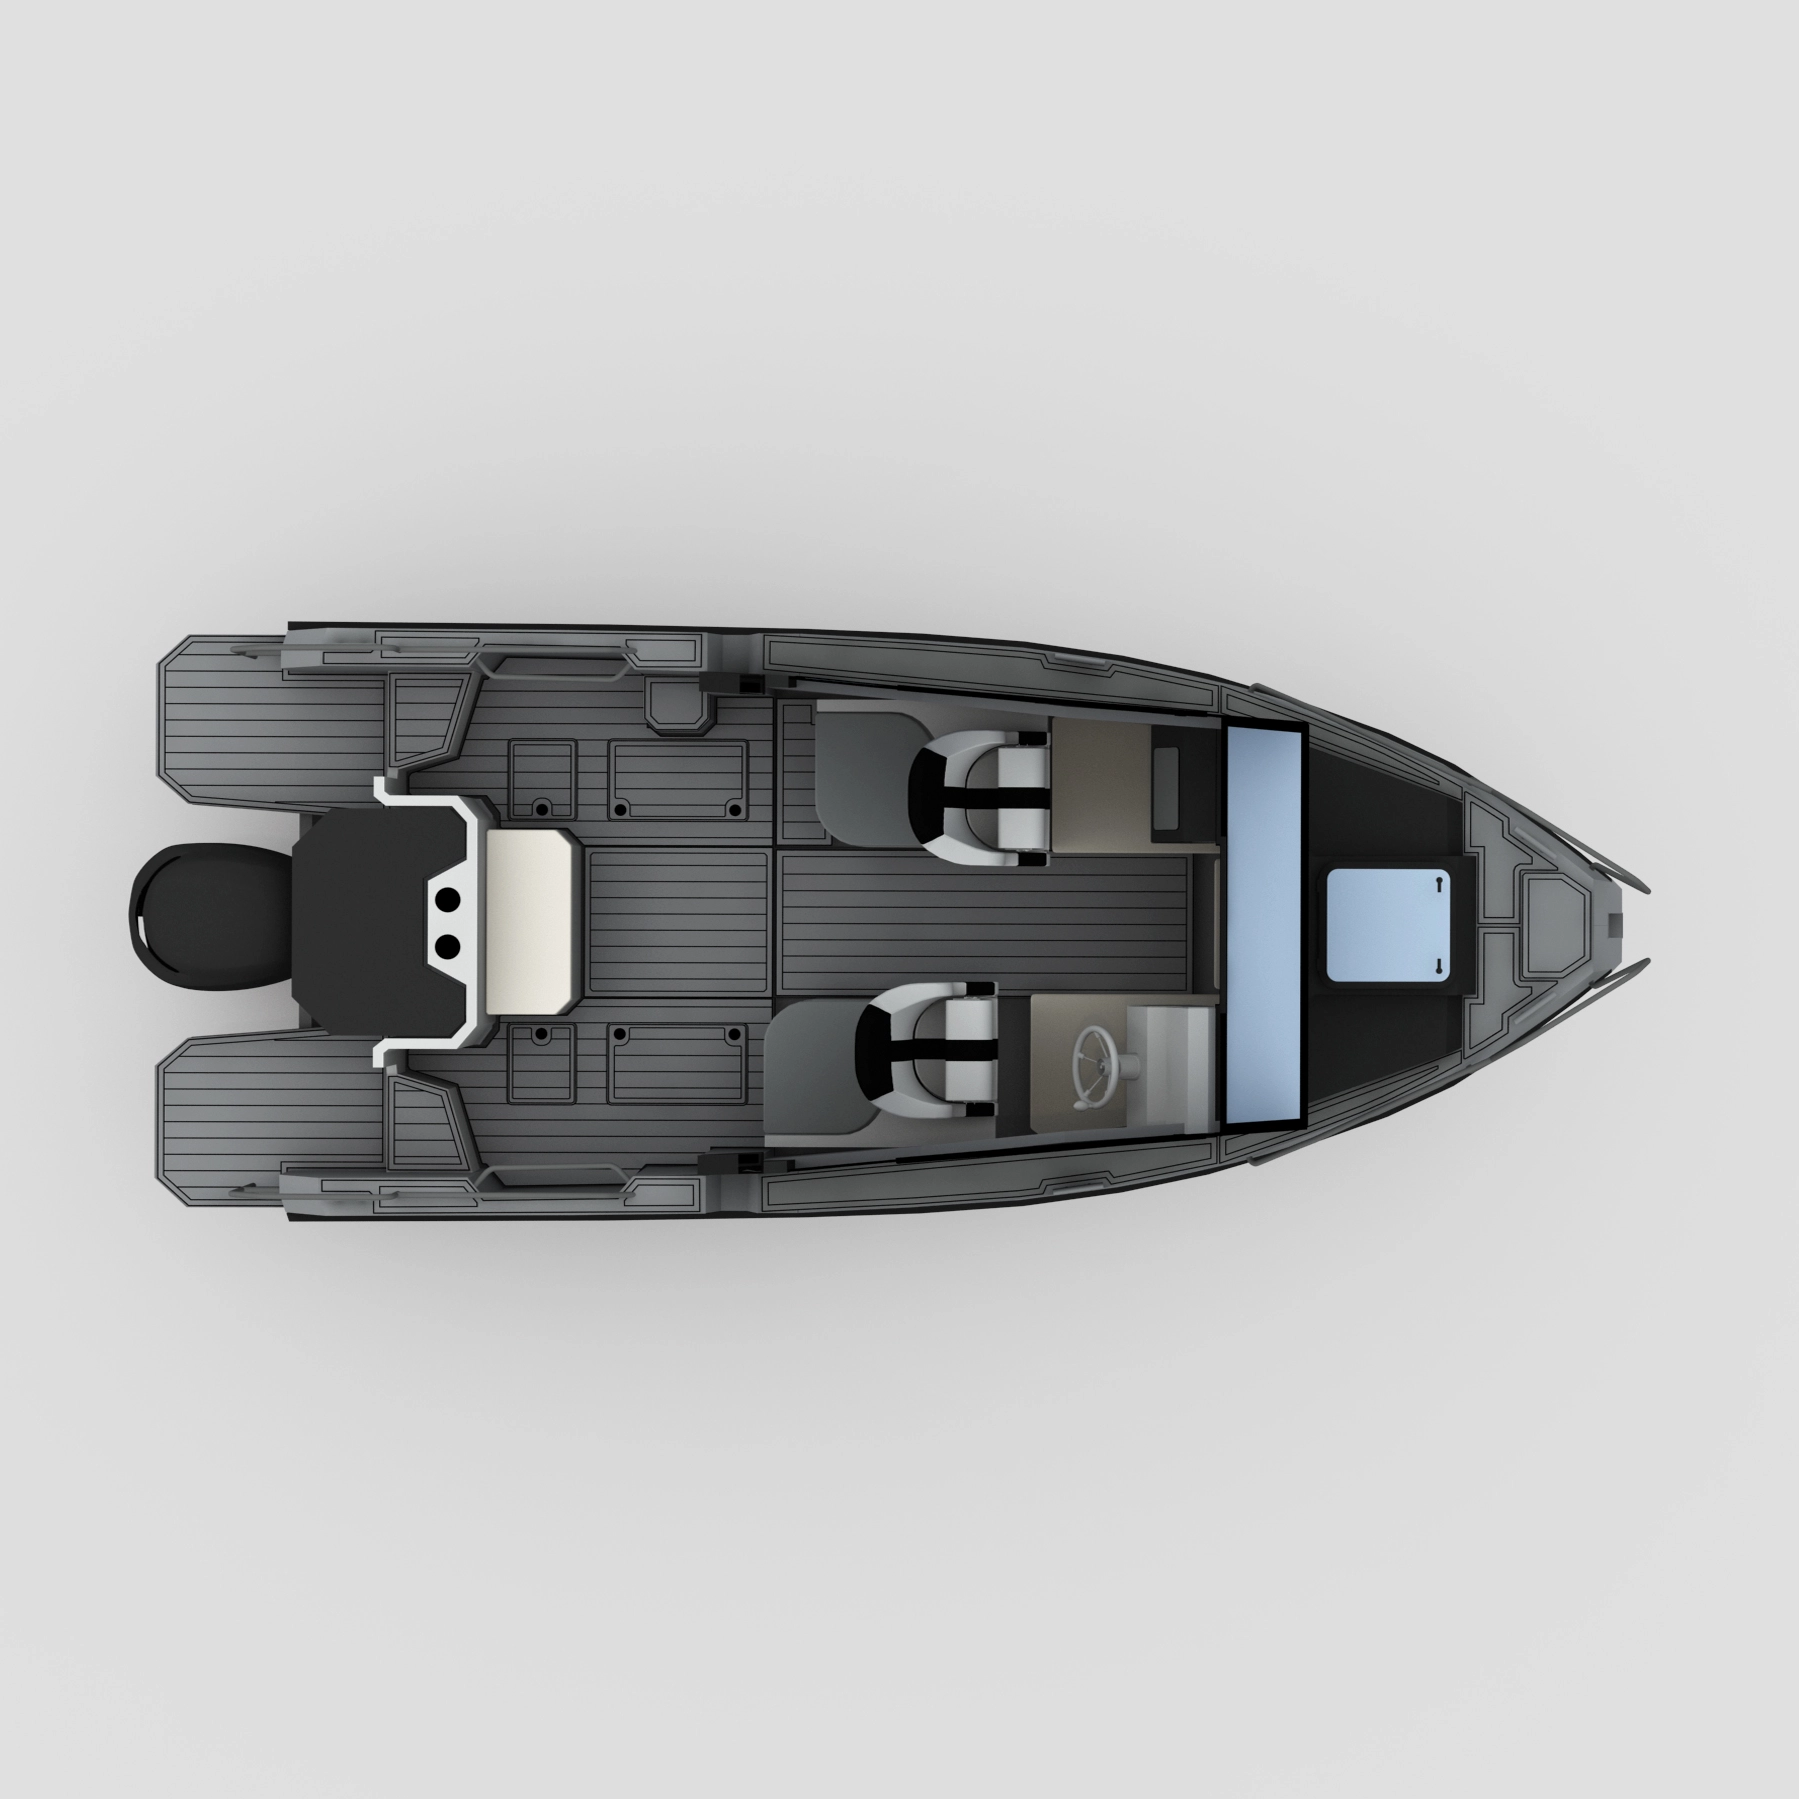 6.2m Bladecraft Aluminum Fishing Boat